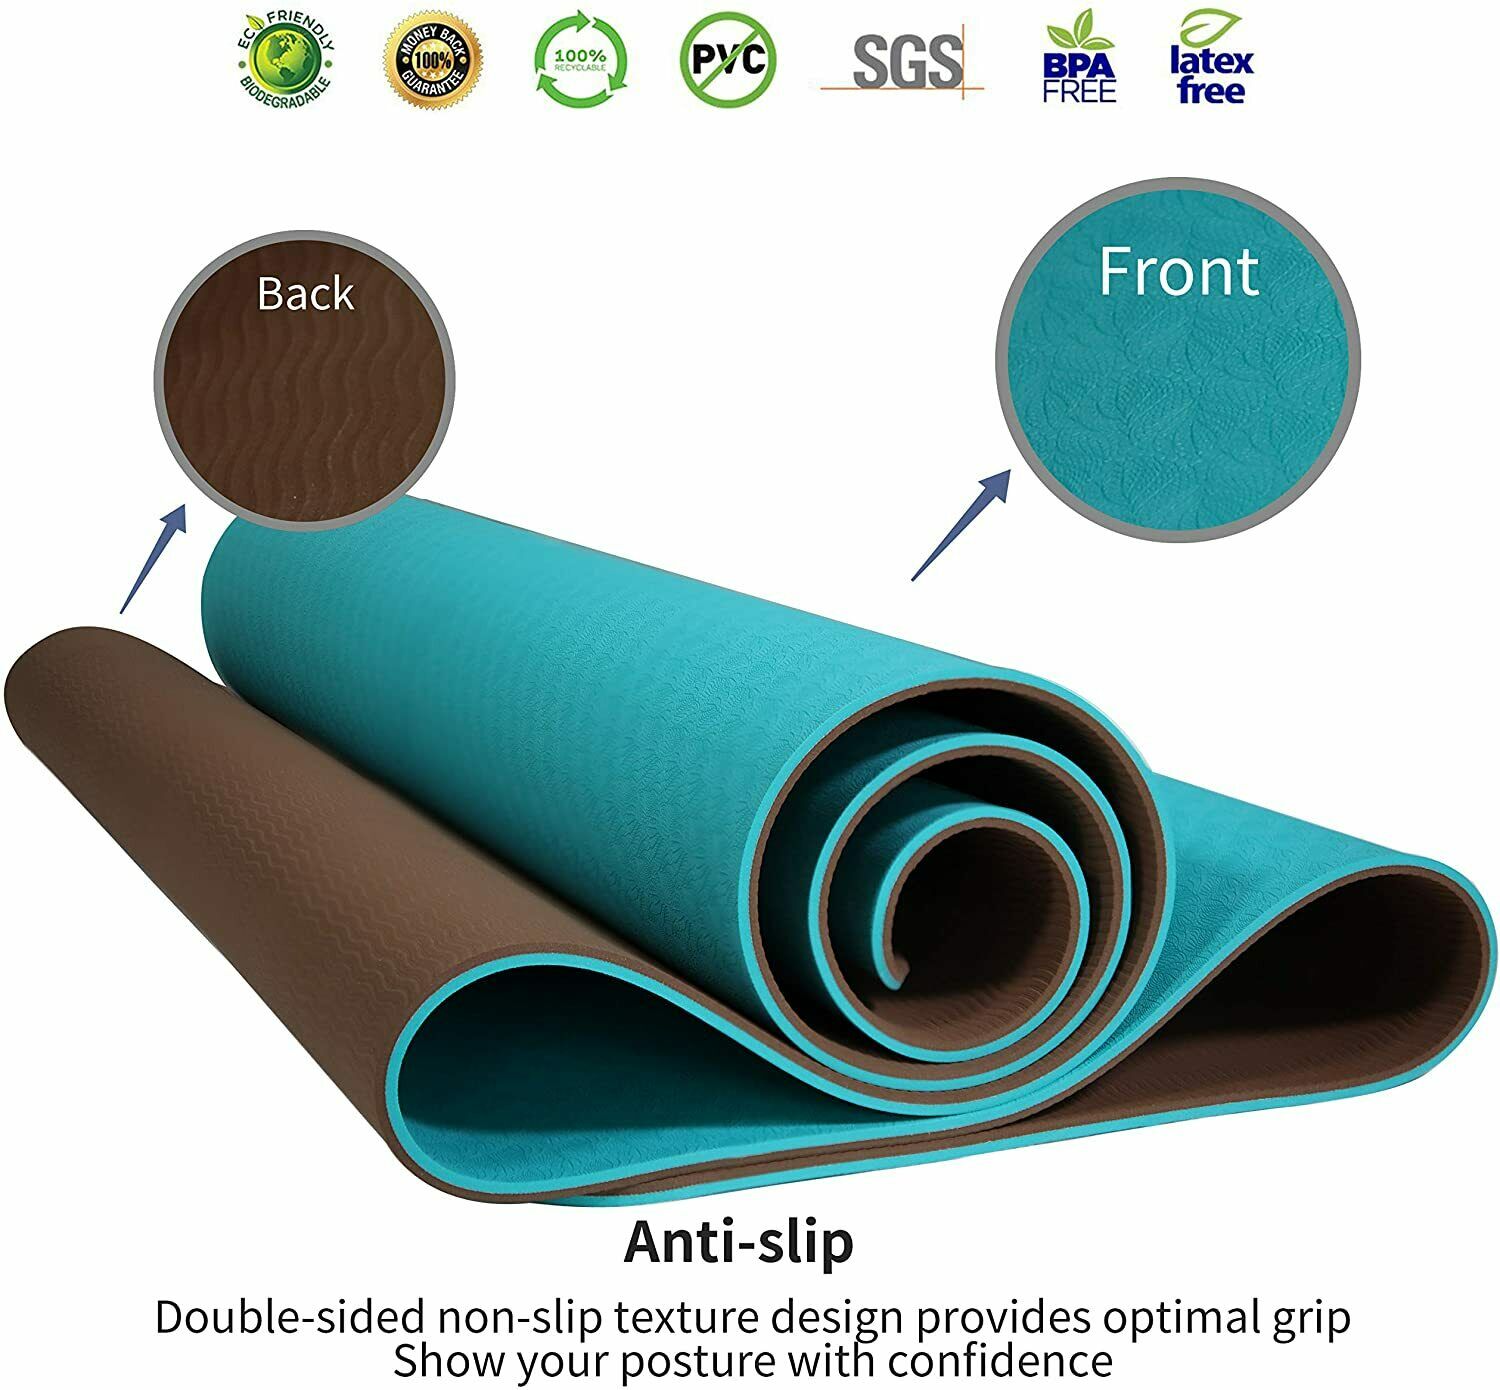 PROIRON Yoga Mat Non Slip Large Exercise Mat Pilates Mat with Carry St – 5  Star Dealz